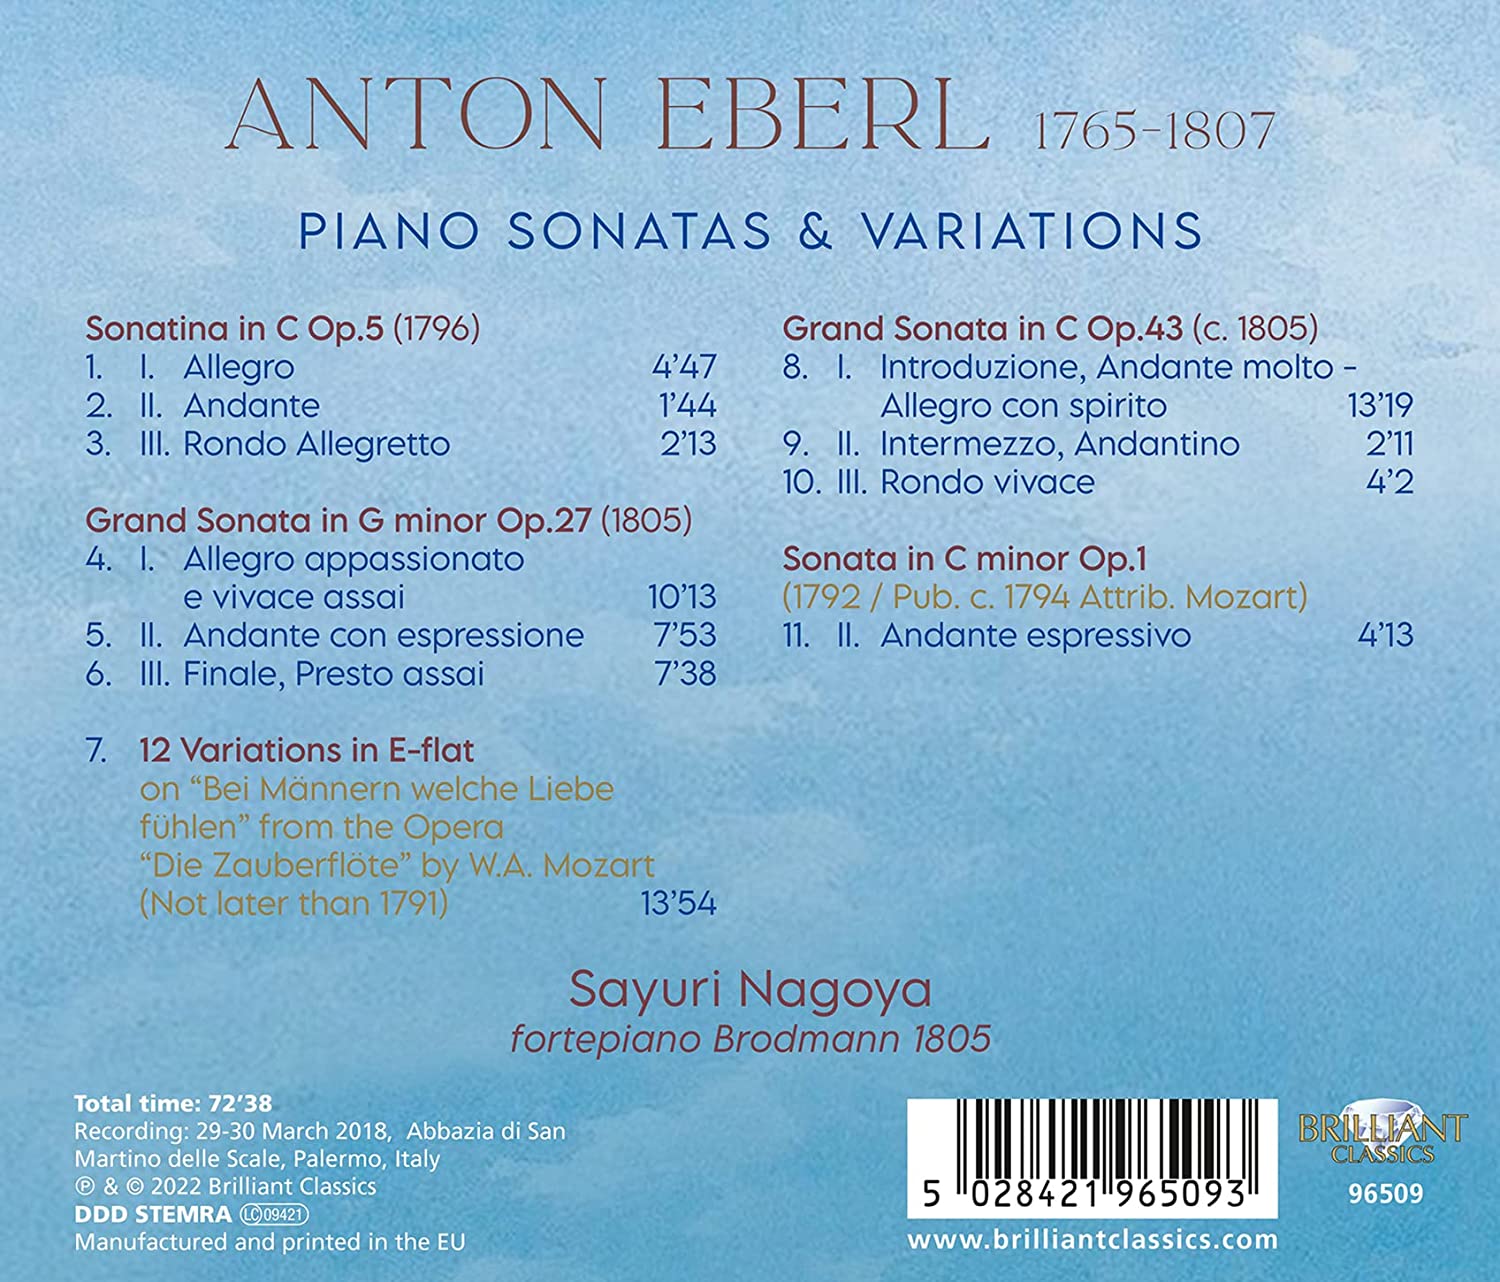 Sayuri Nagoya 안톤 에베를: 피아노 소나타 및 변주곡 (Anton Eberl: Piano Sonatas and Variations) 